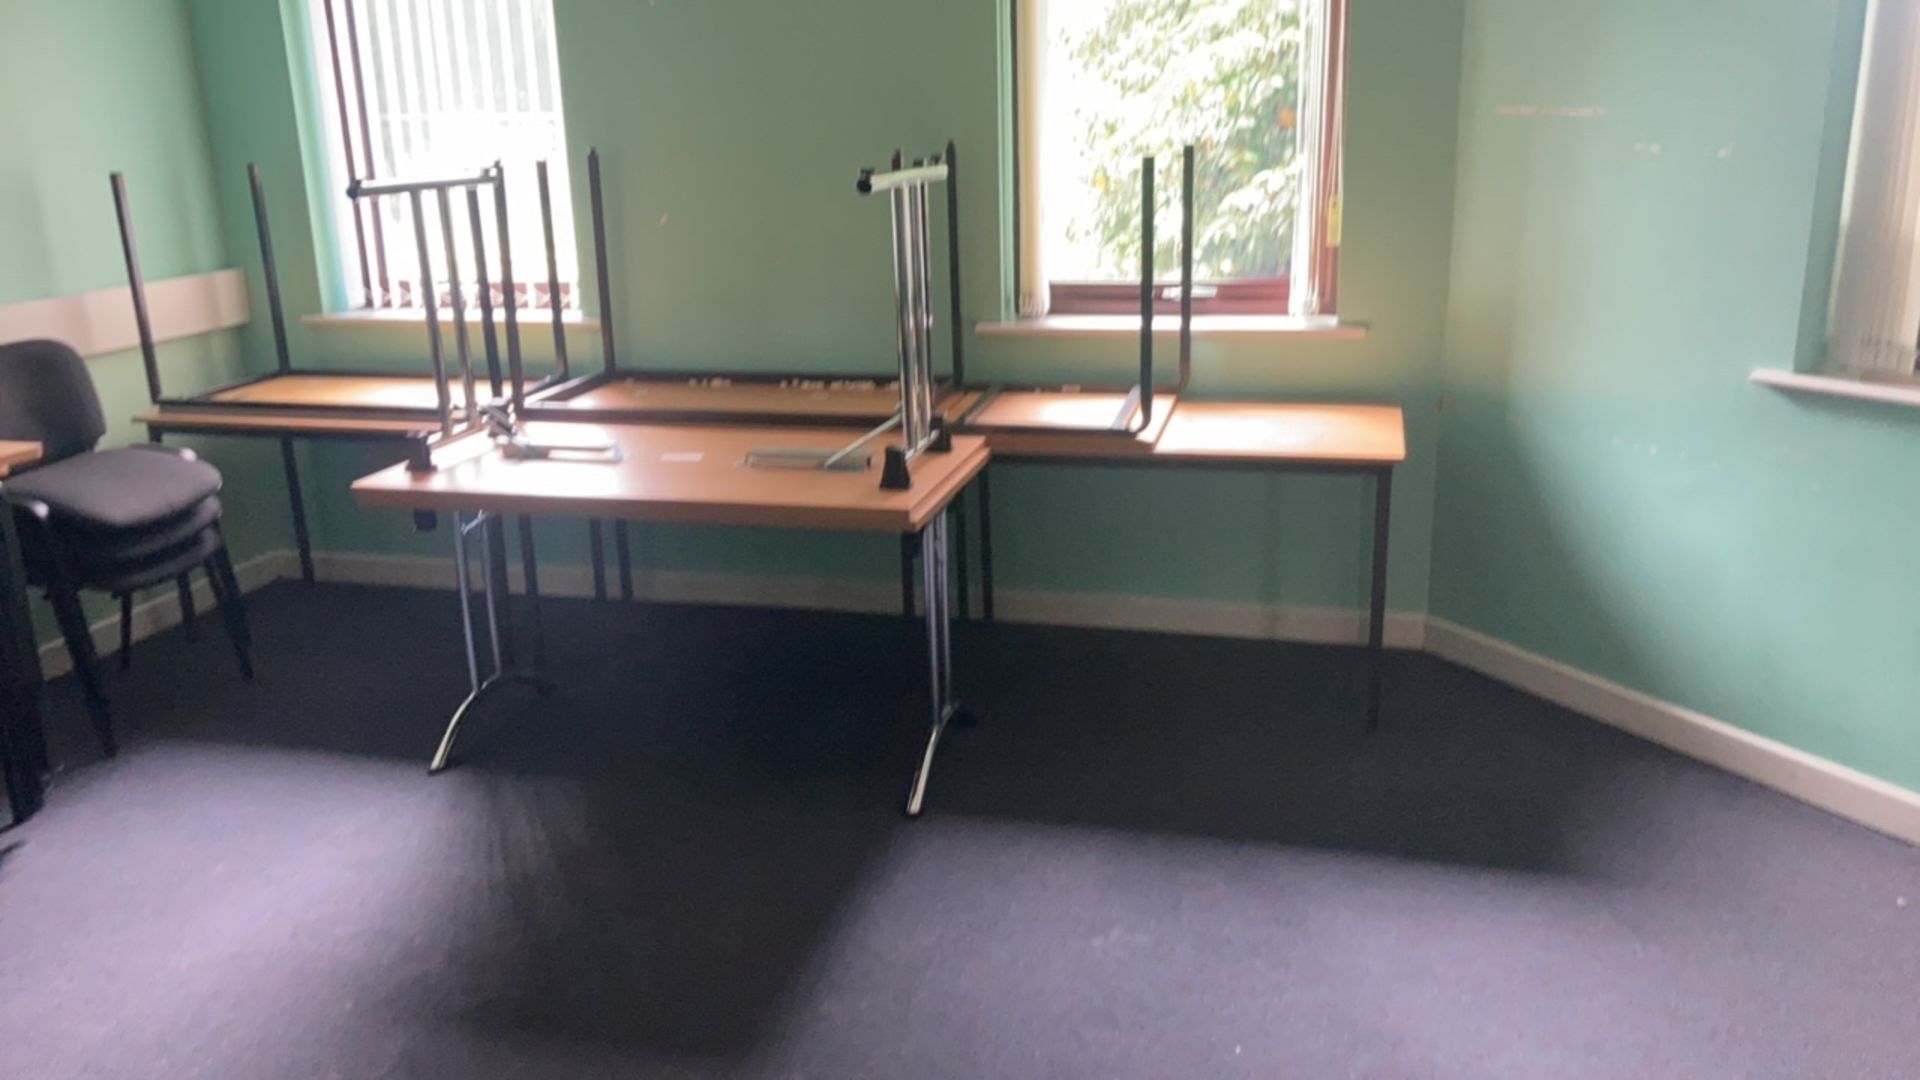 Classroom furniture - Image 2 of 3